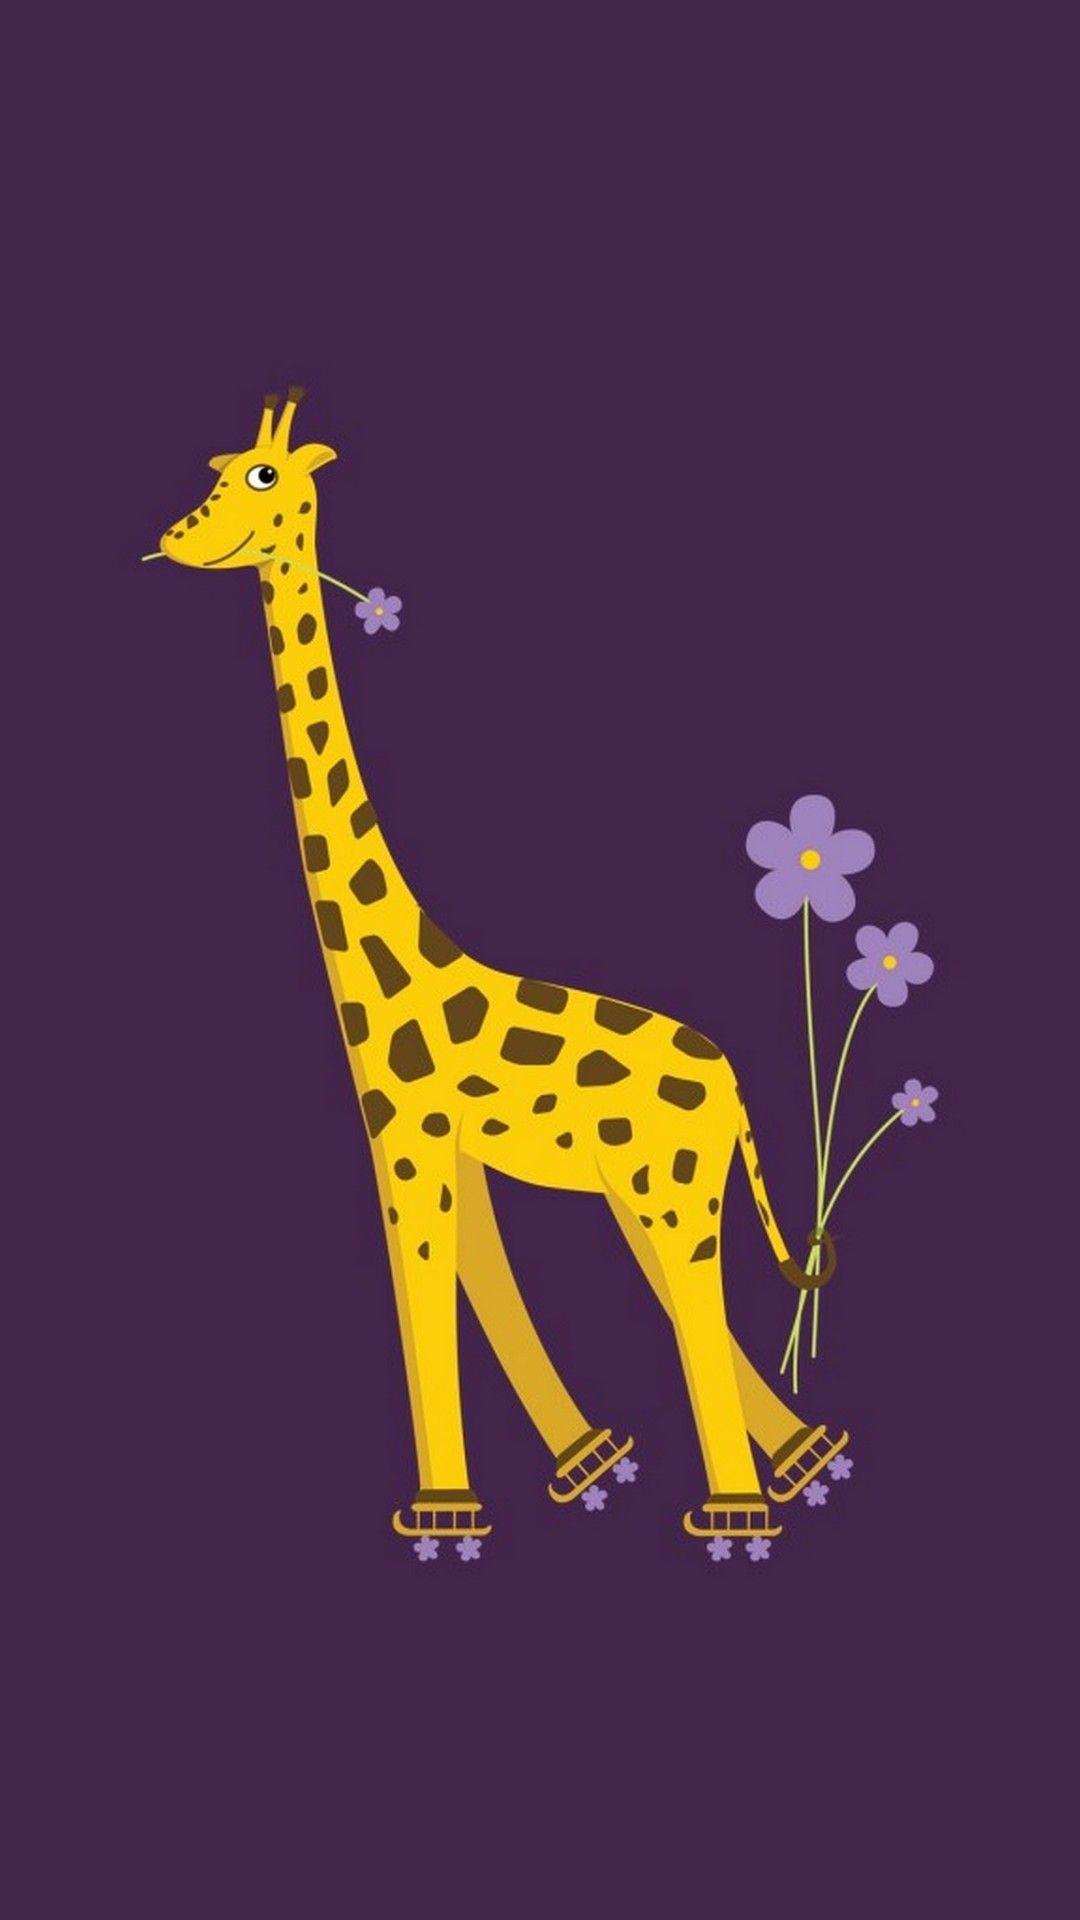 Purple Cute Giraffe iPhone Wallpaper iPhone Wallpaper. Desktop wallpaper art, iPhone wallpaper, Giraffe